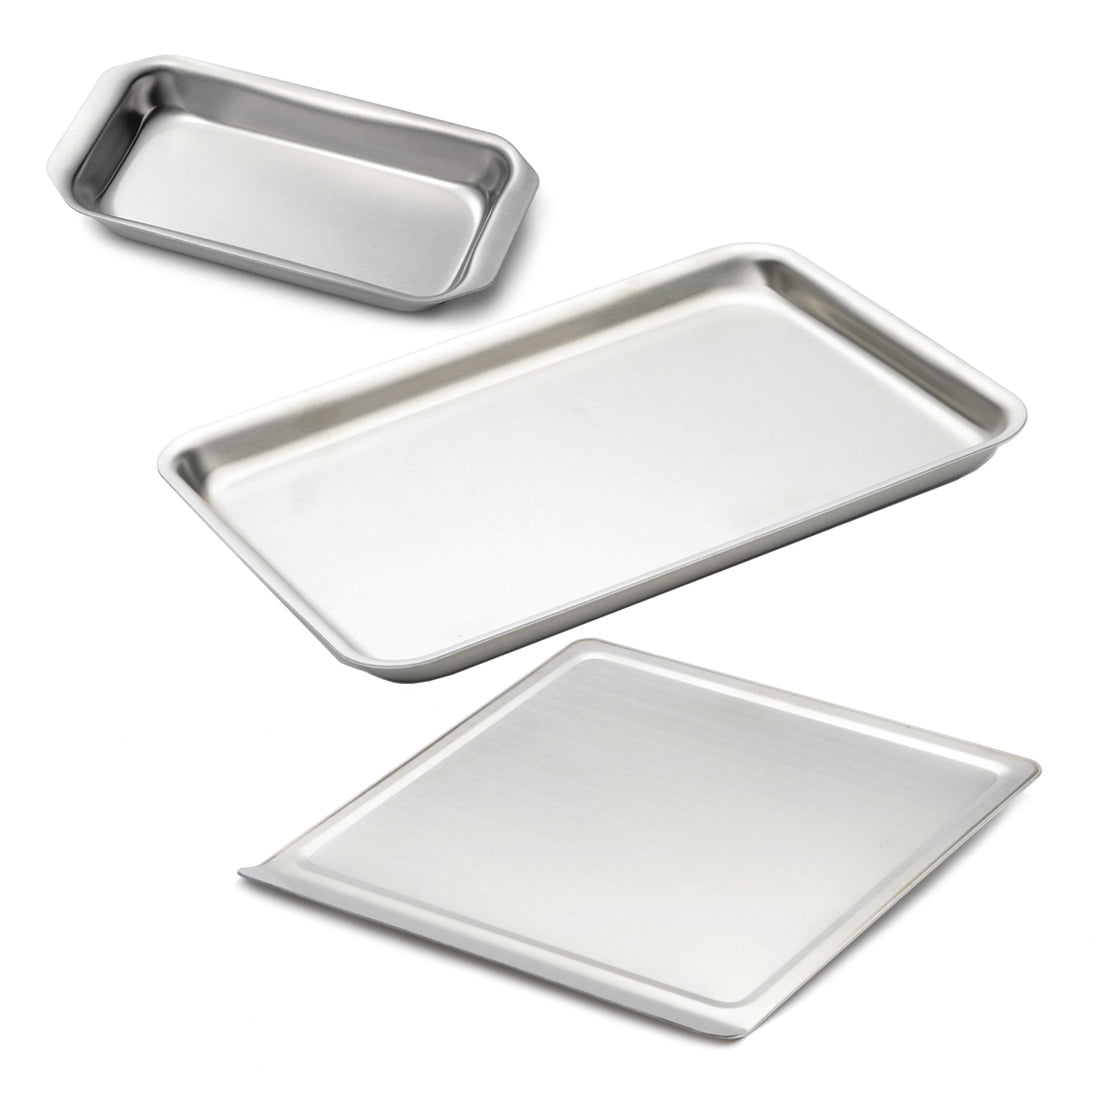 Baking Pans Set of 3, E-far Stainless Steel Sheet Cake Pan for